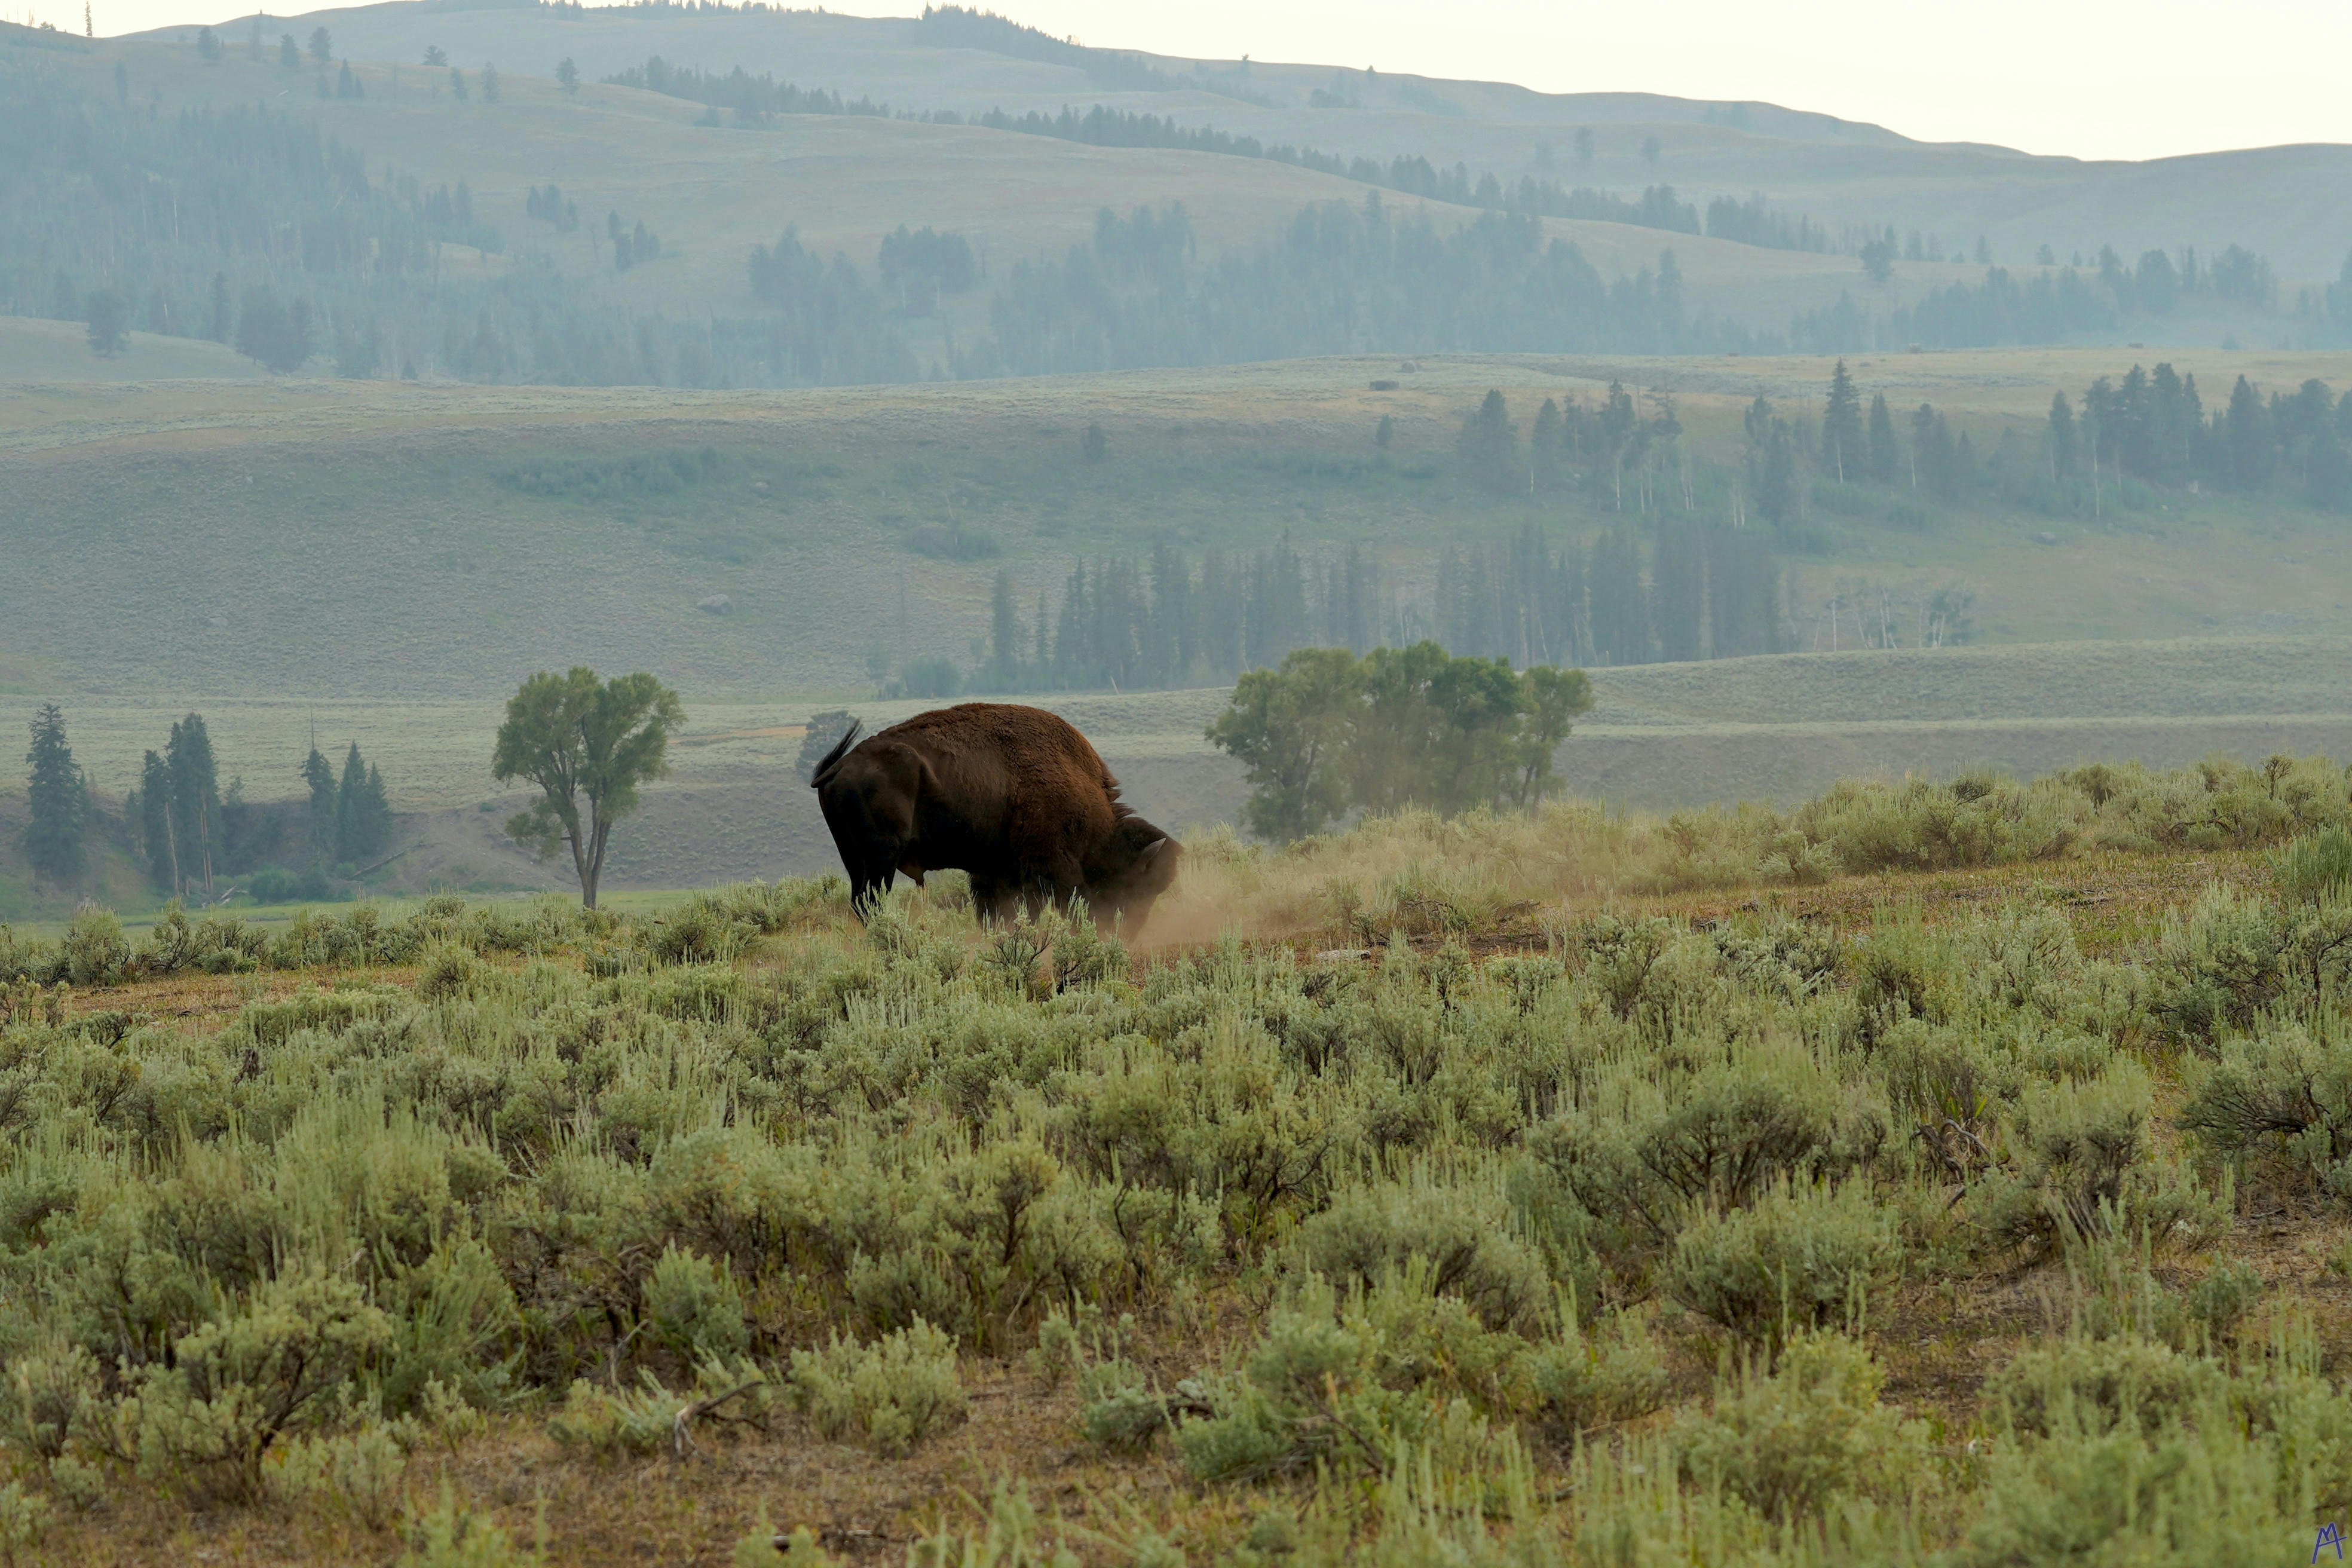 Bison kicking up dirt on plain at Yellowstone